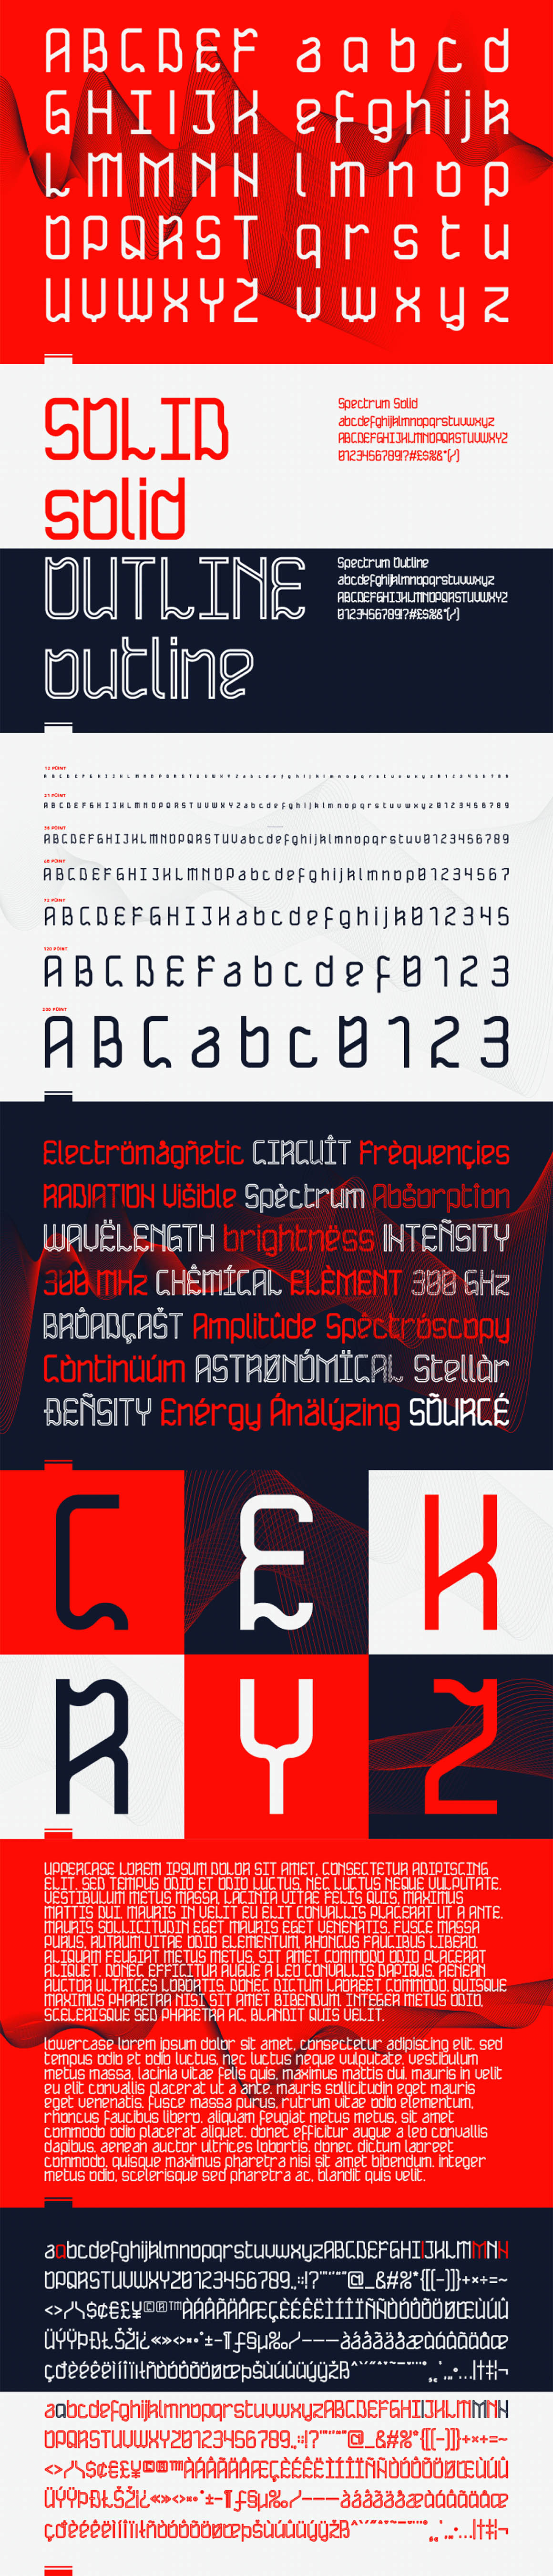 Spectrum - Free Font - Dealjumbo